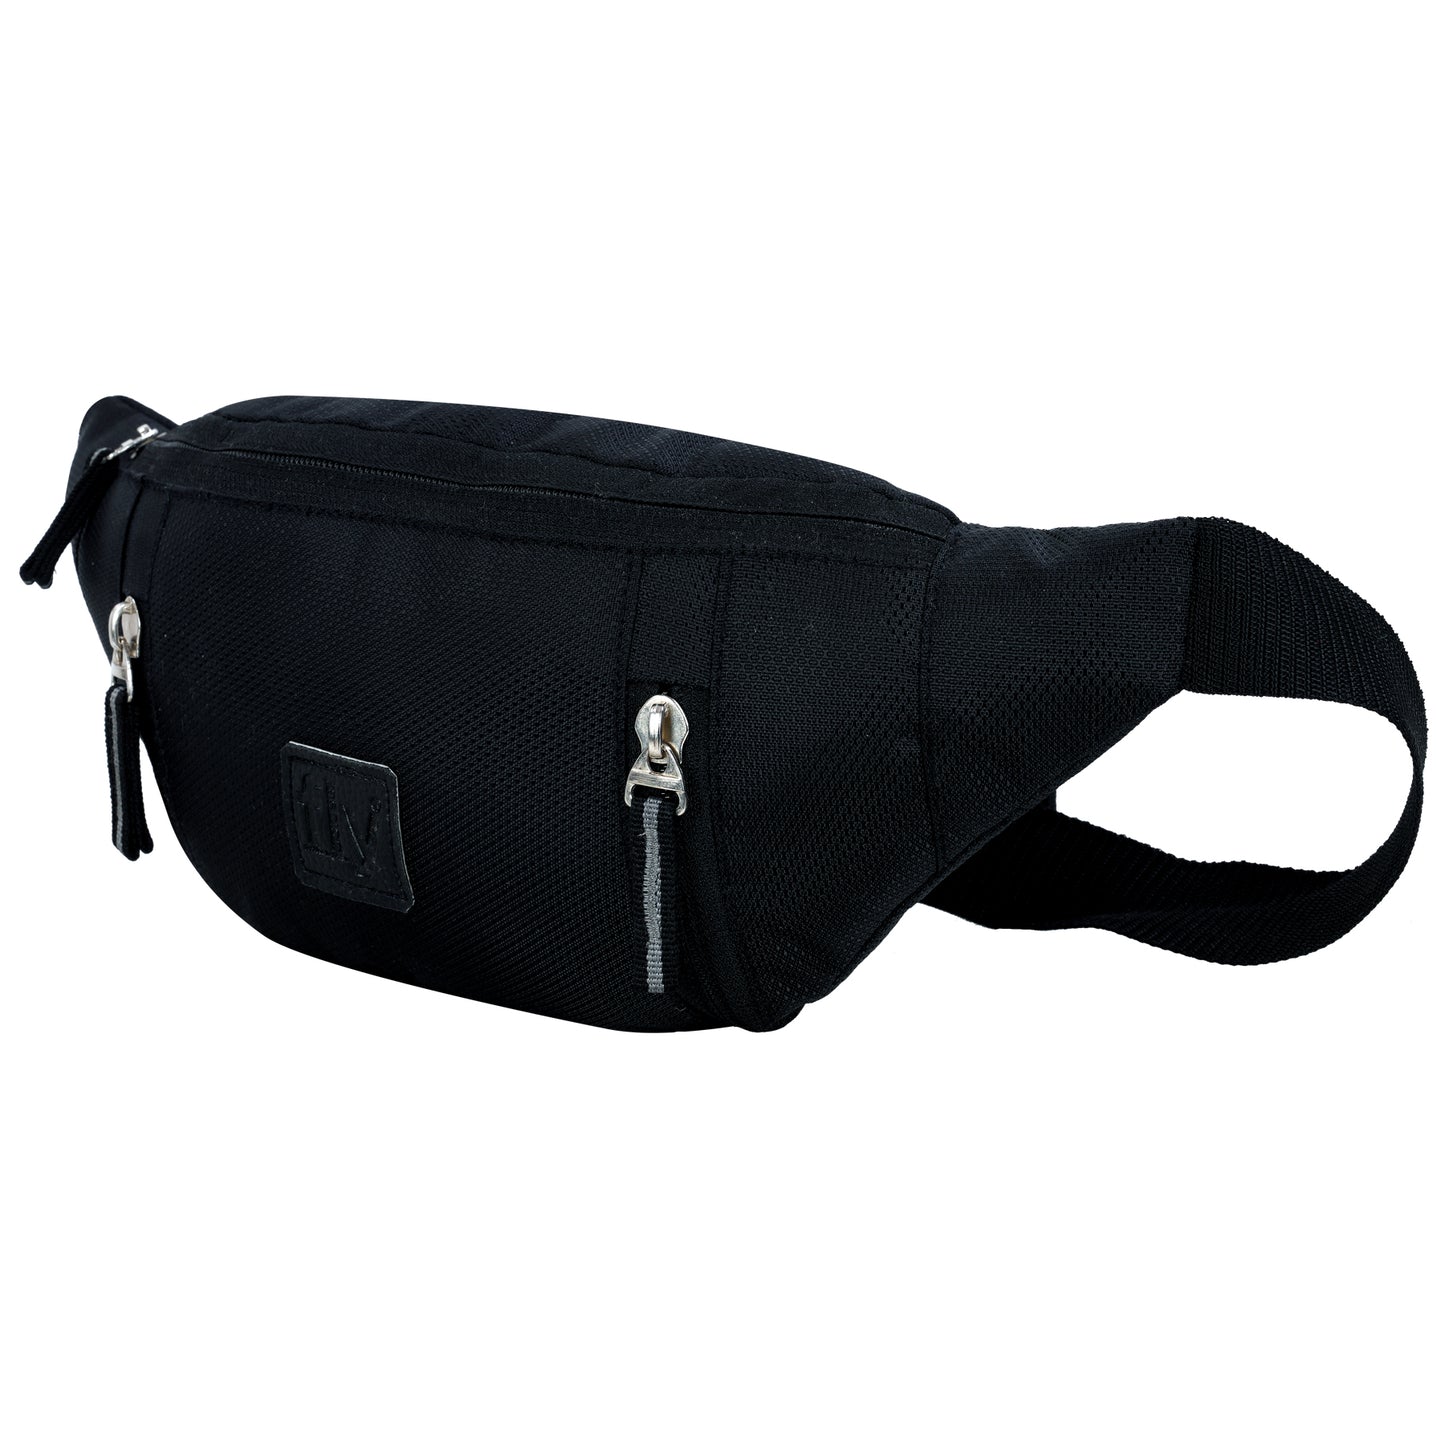 Leather World Waist Bag Travel waist Pouch Belt Sport Bag Bum Bag for Men and Women Nylon (Black)